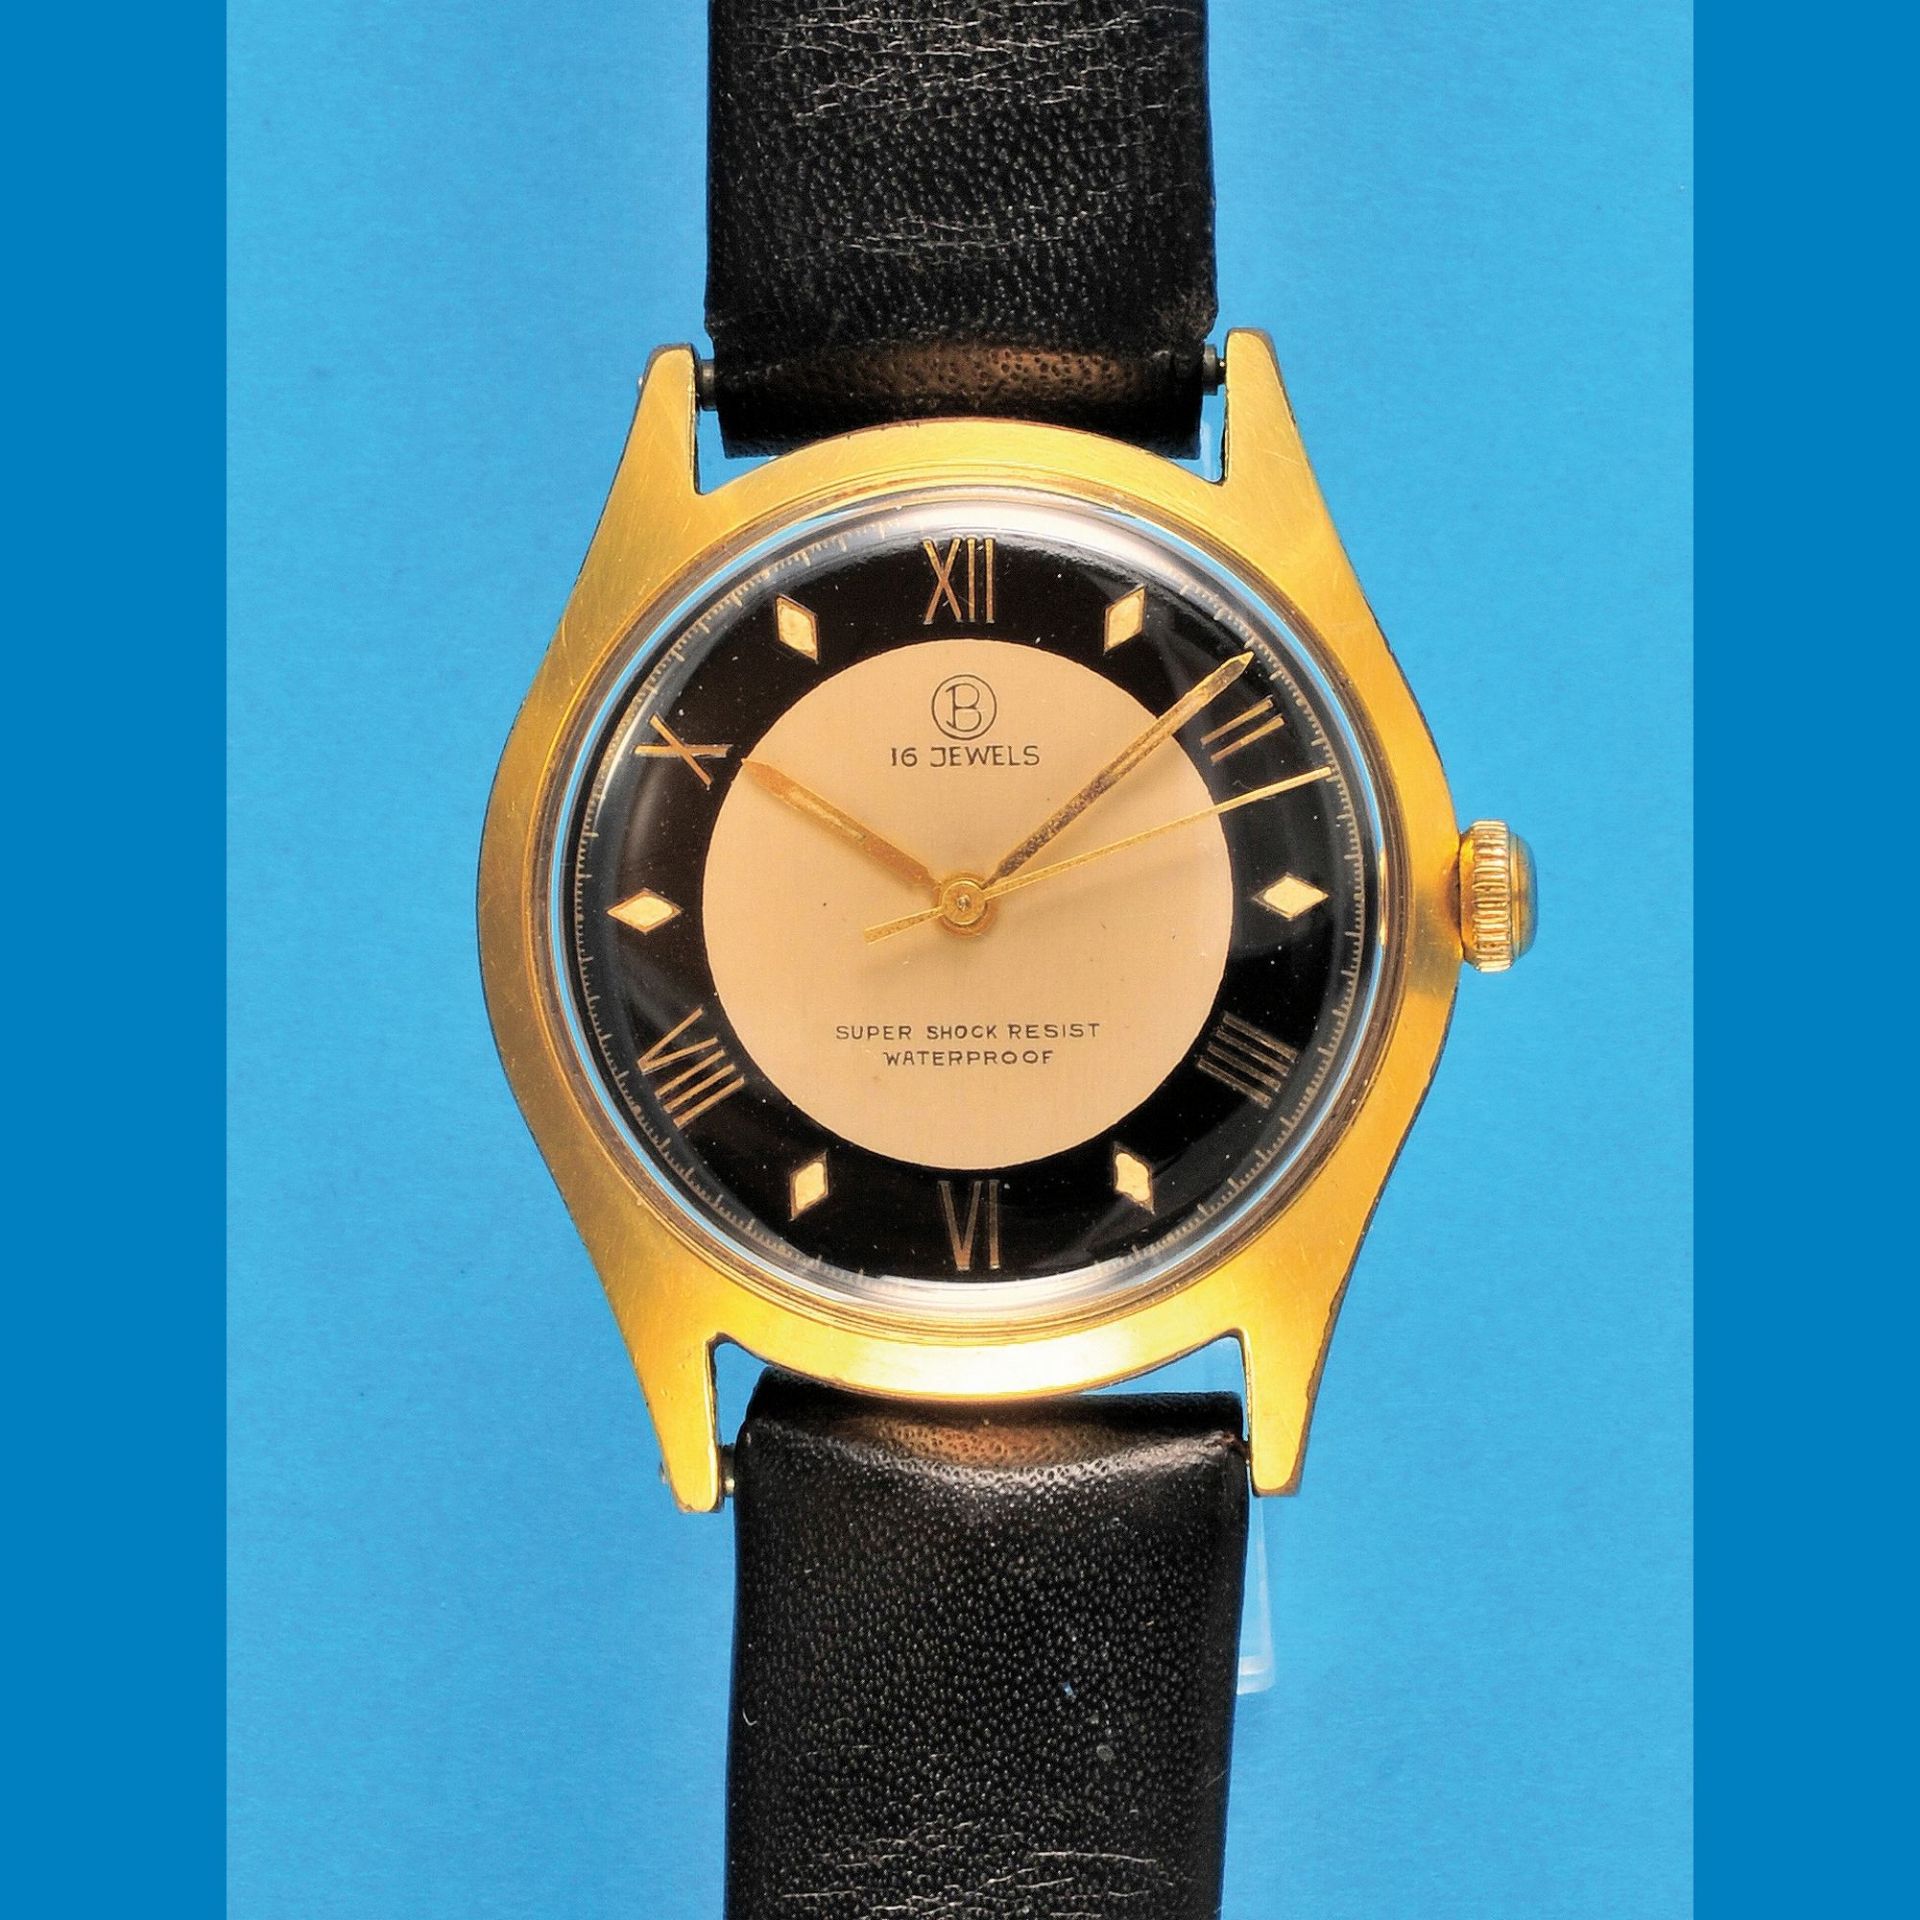 Bifora Super Shock Resist, gold plated wristwatch